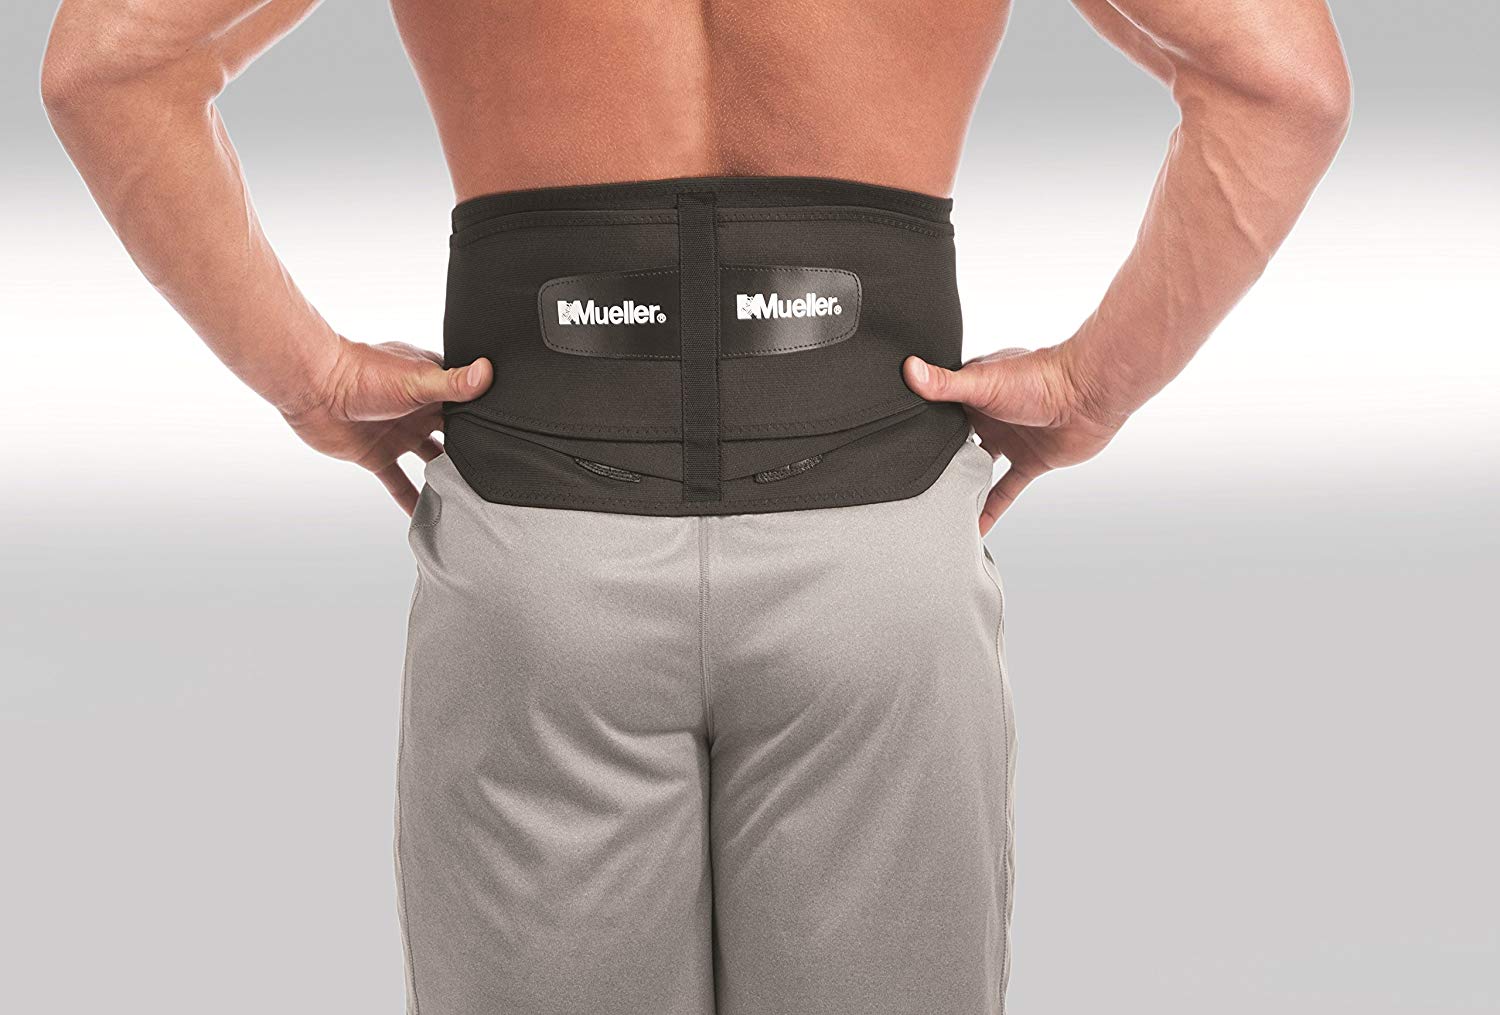 The Mueller copper belt for back pain